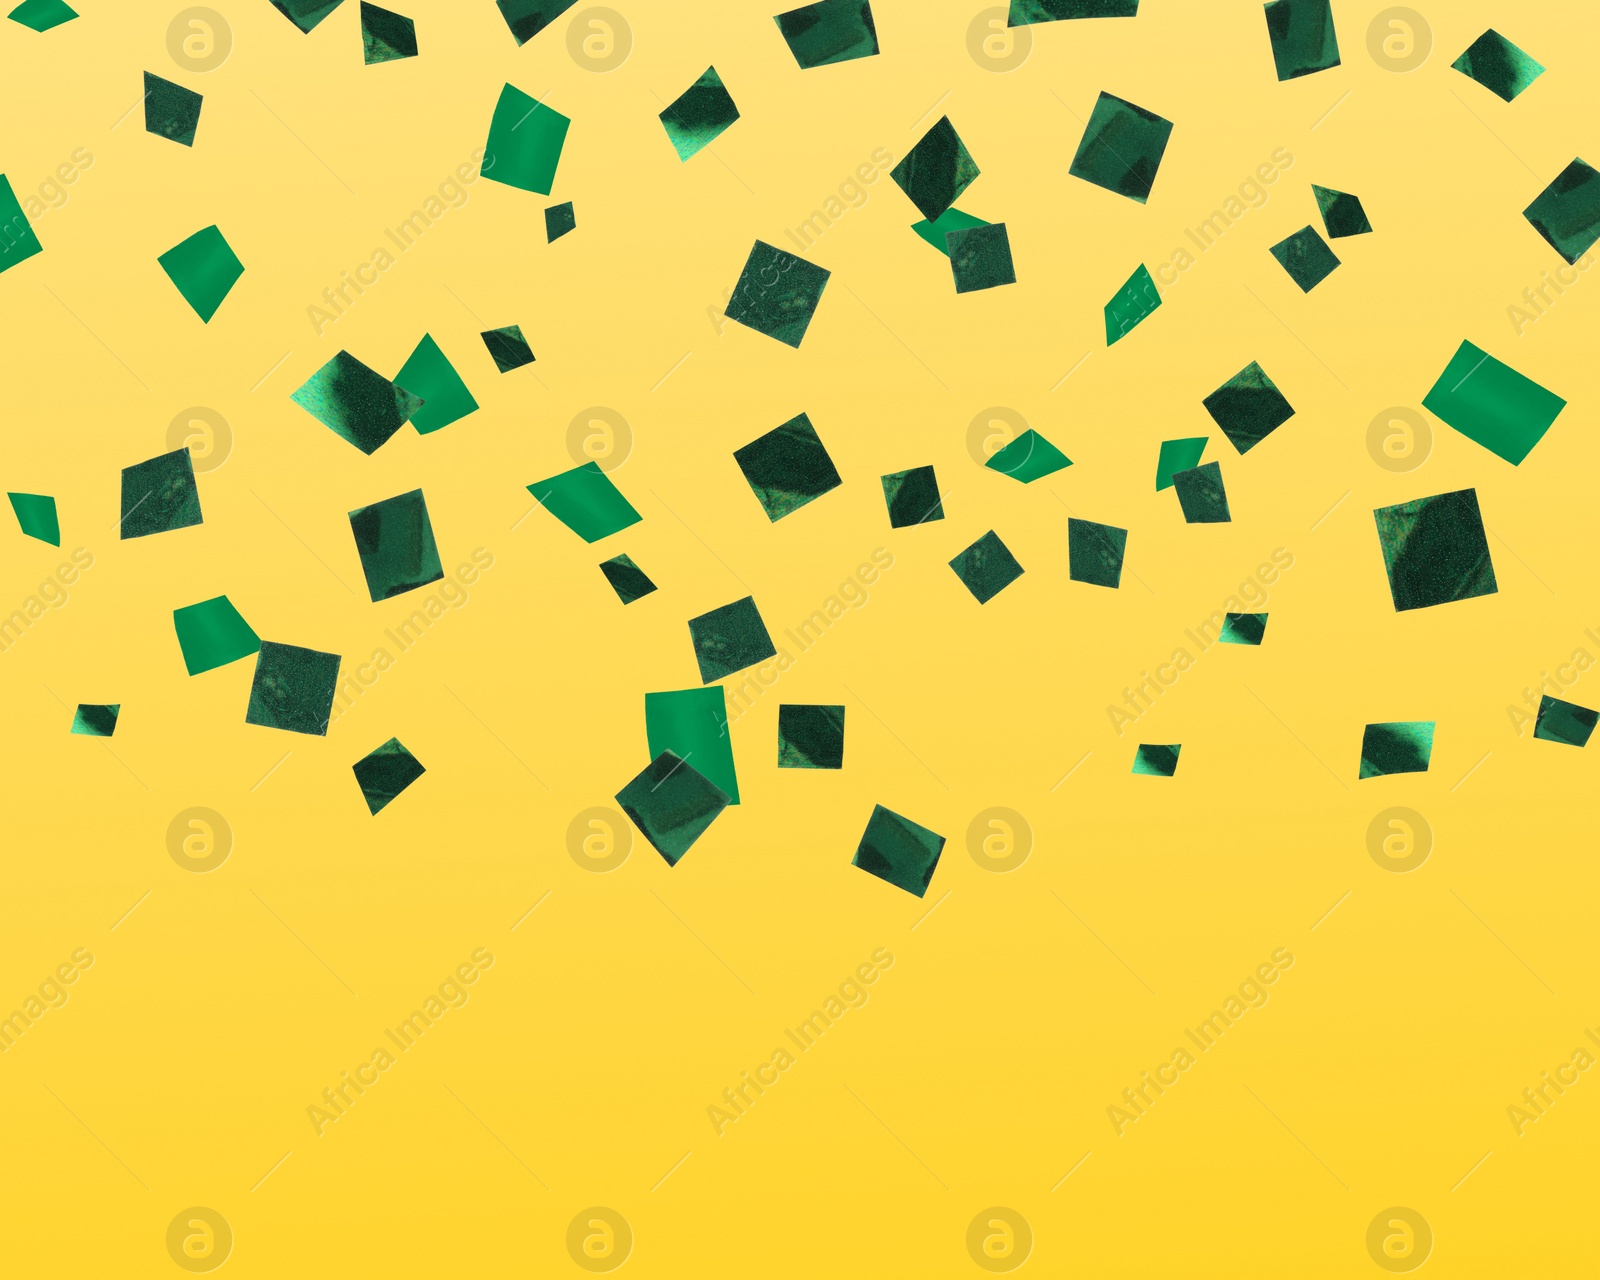 Image of Shiny green confetti falling on yellow background